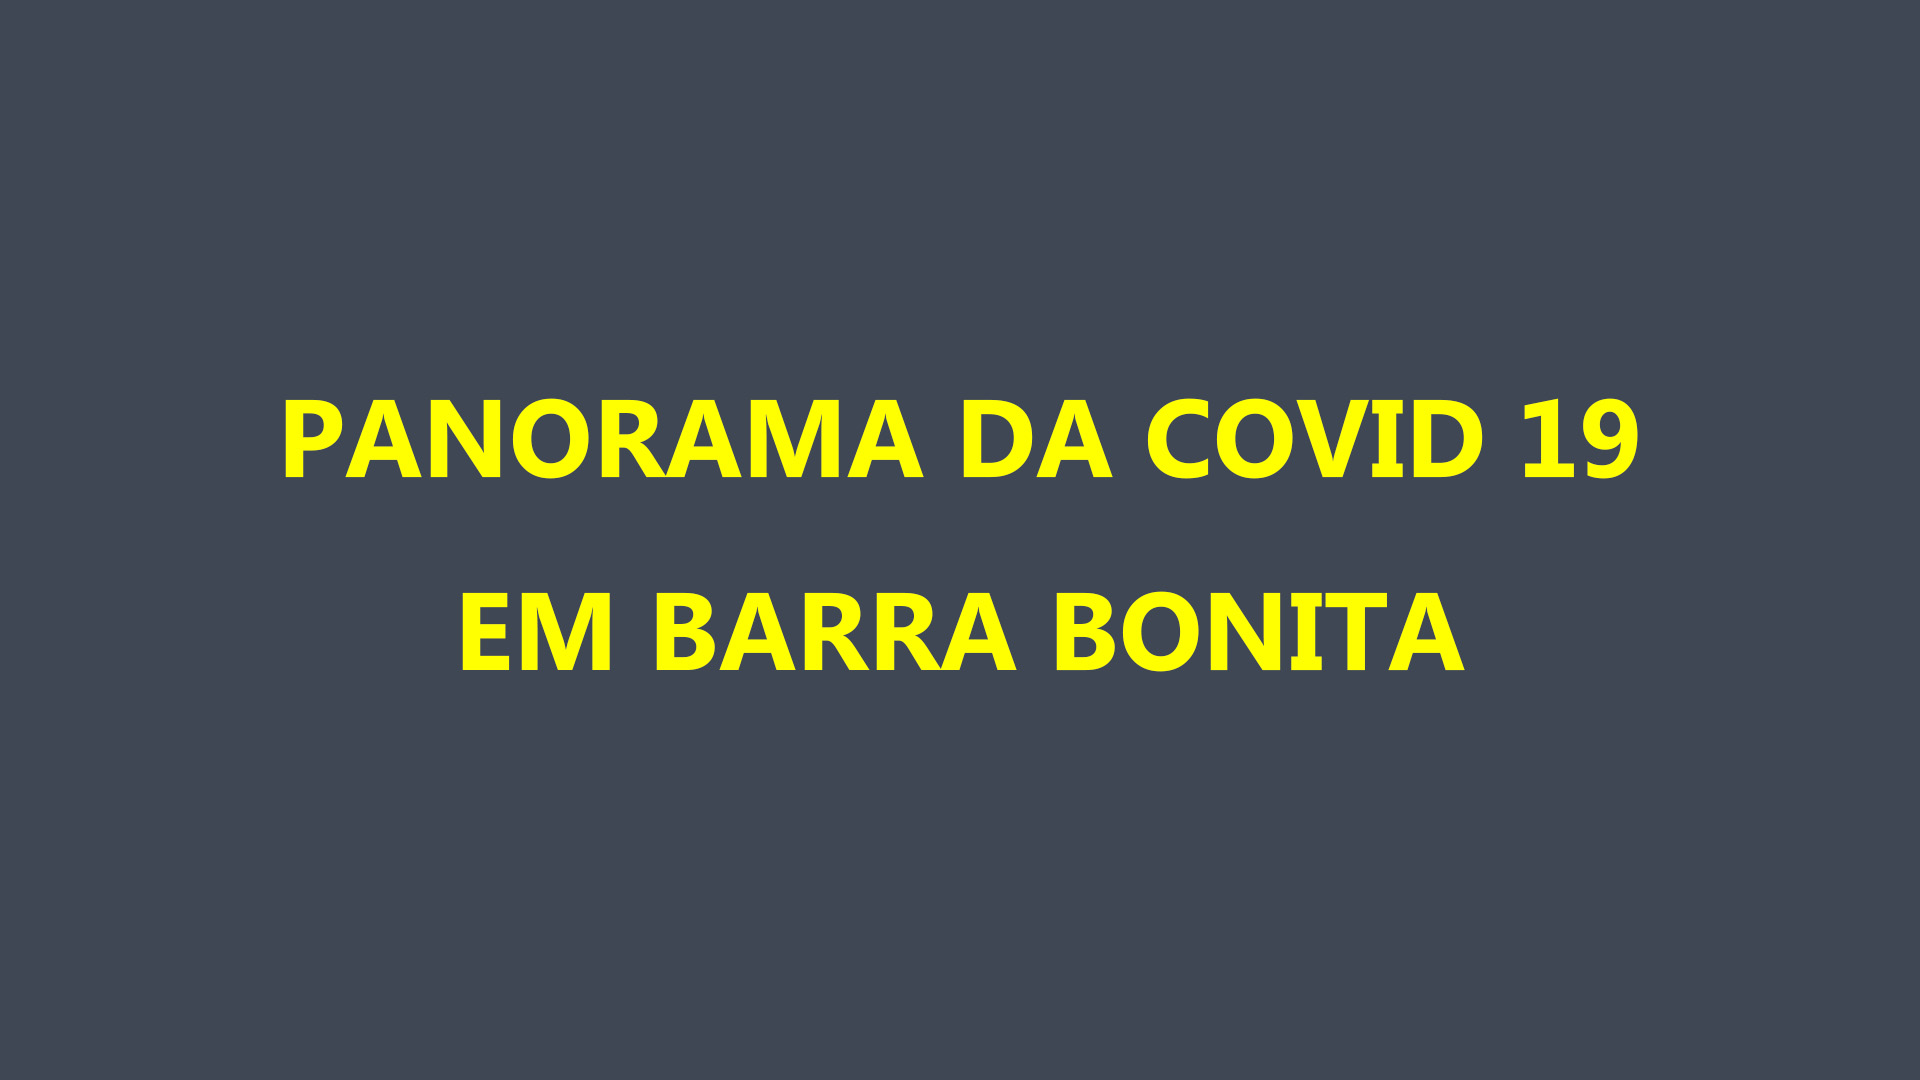 PANORAMA DA COVID 19 EM BARRA BONITA